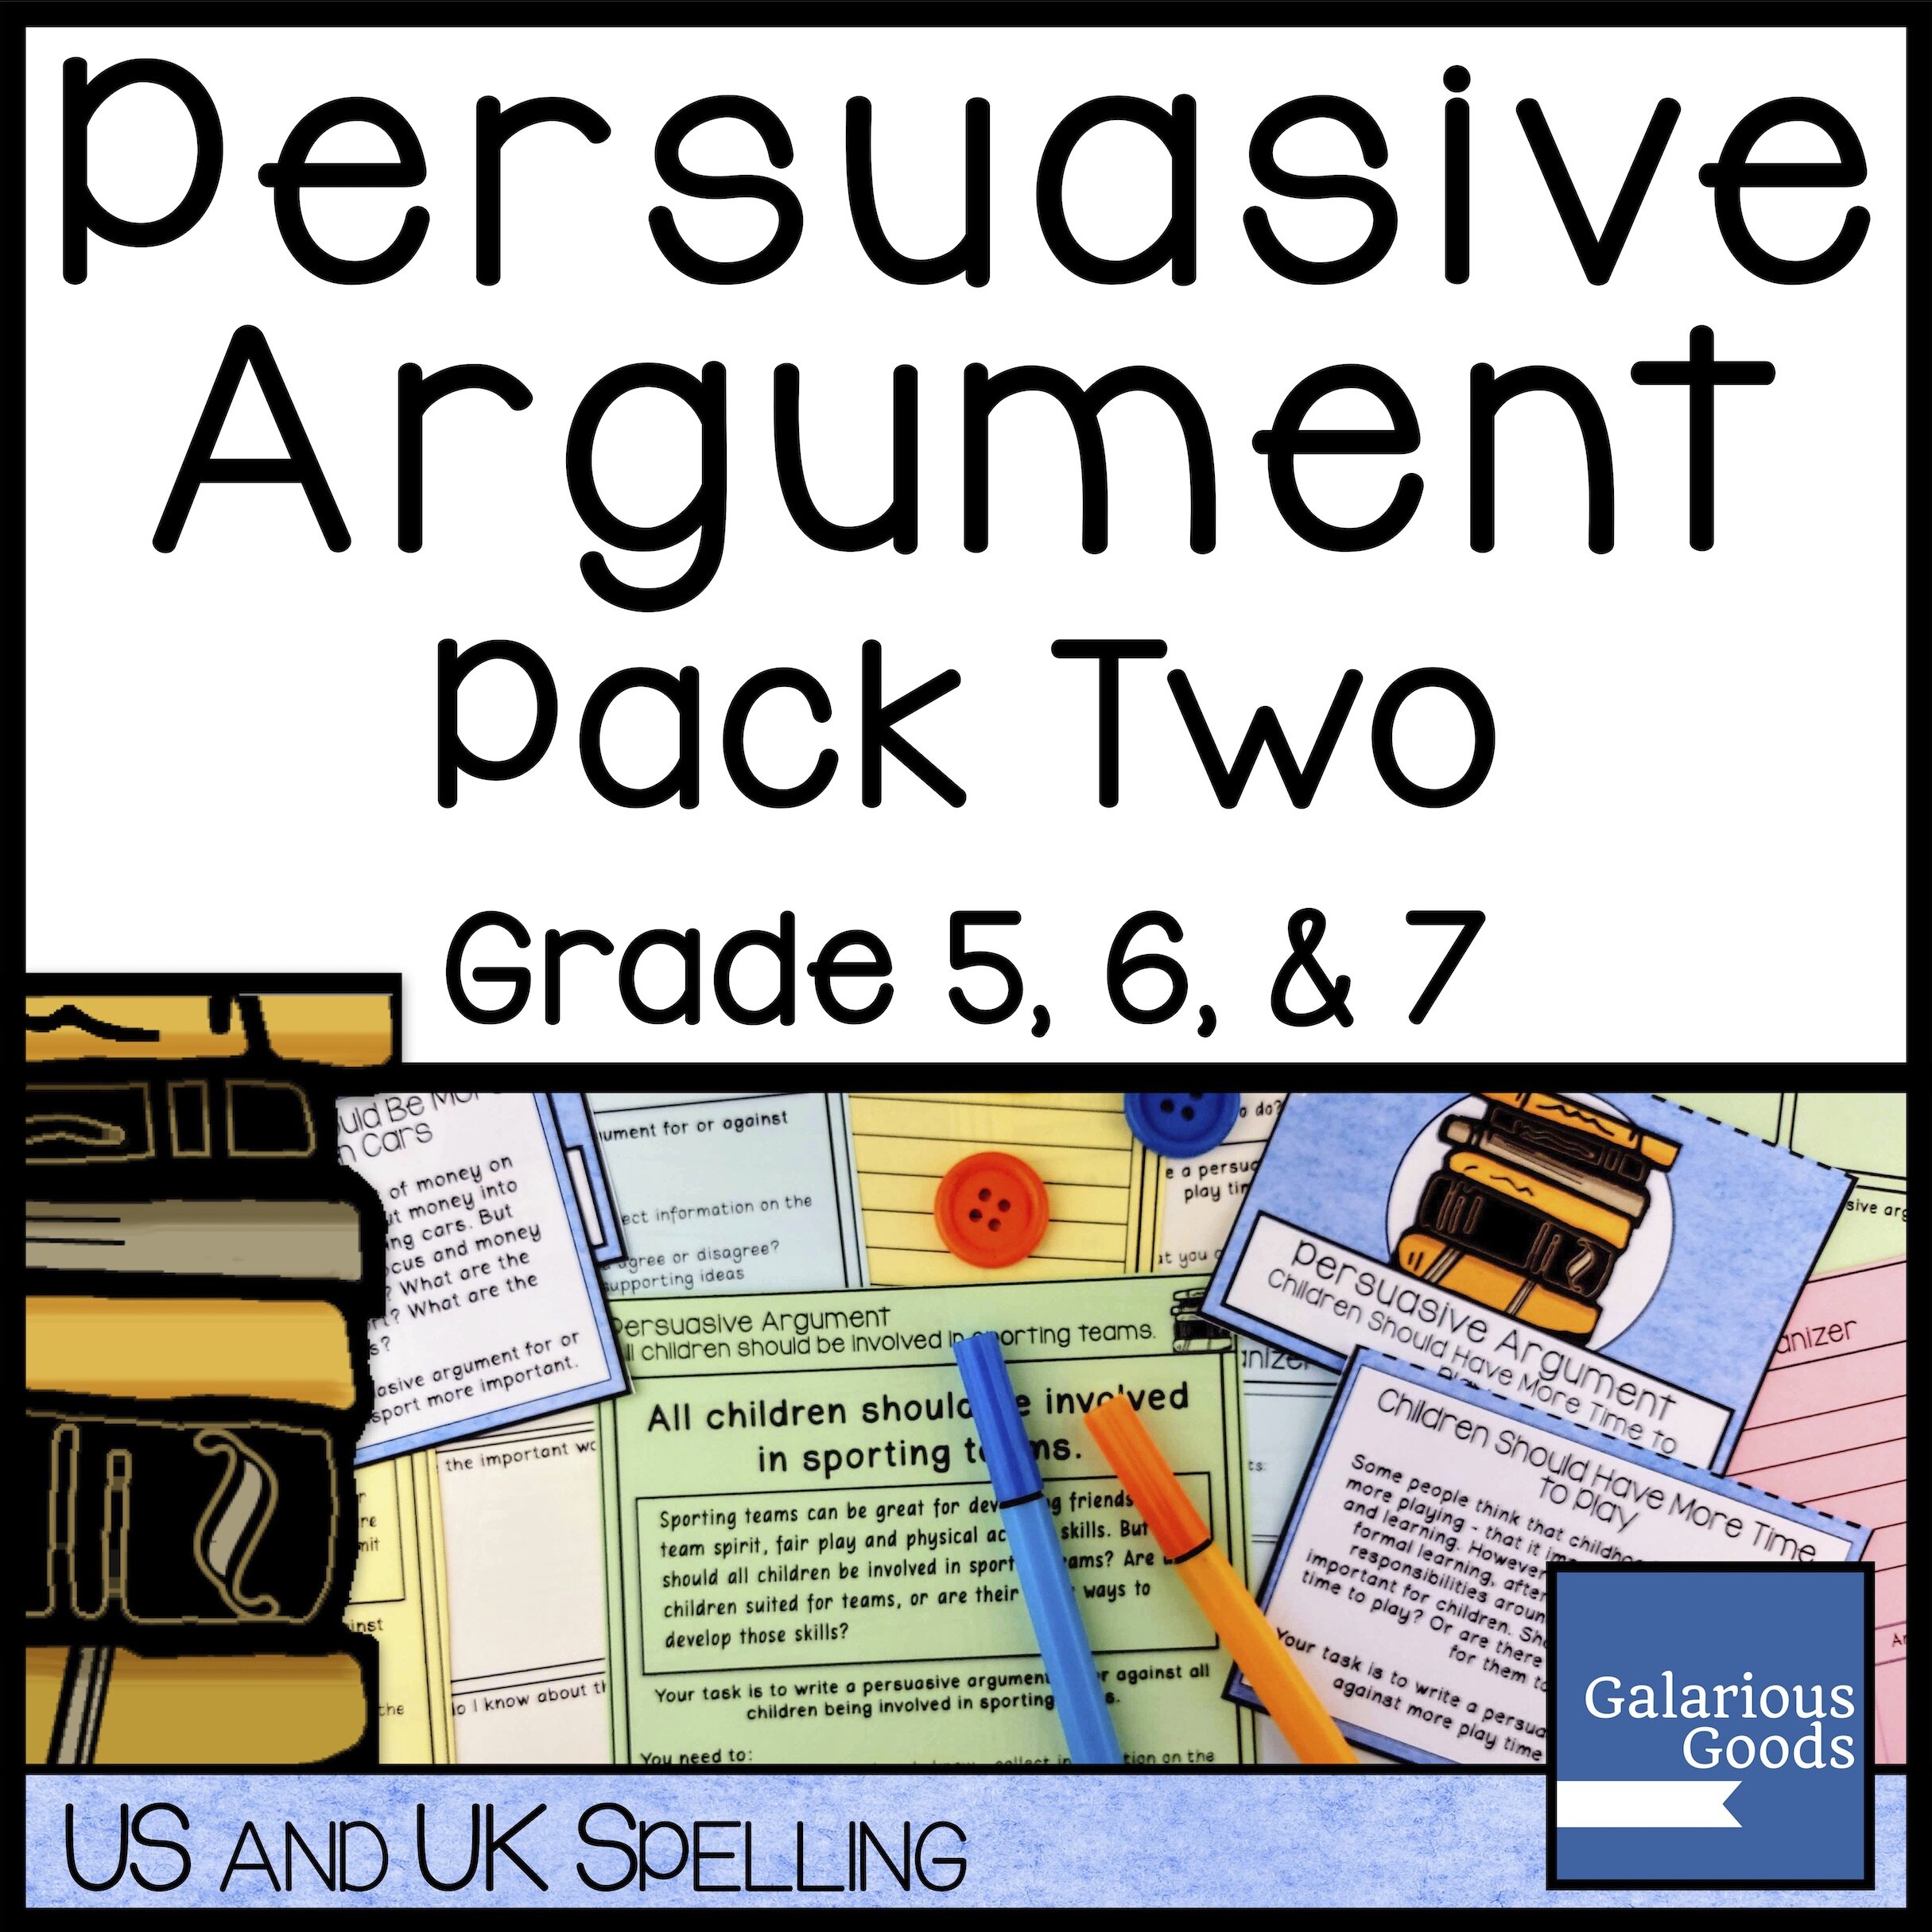 cover persuasive pack 2.jpg